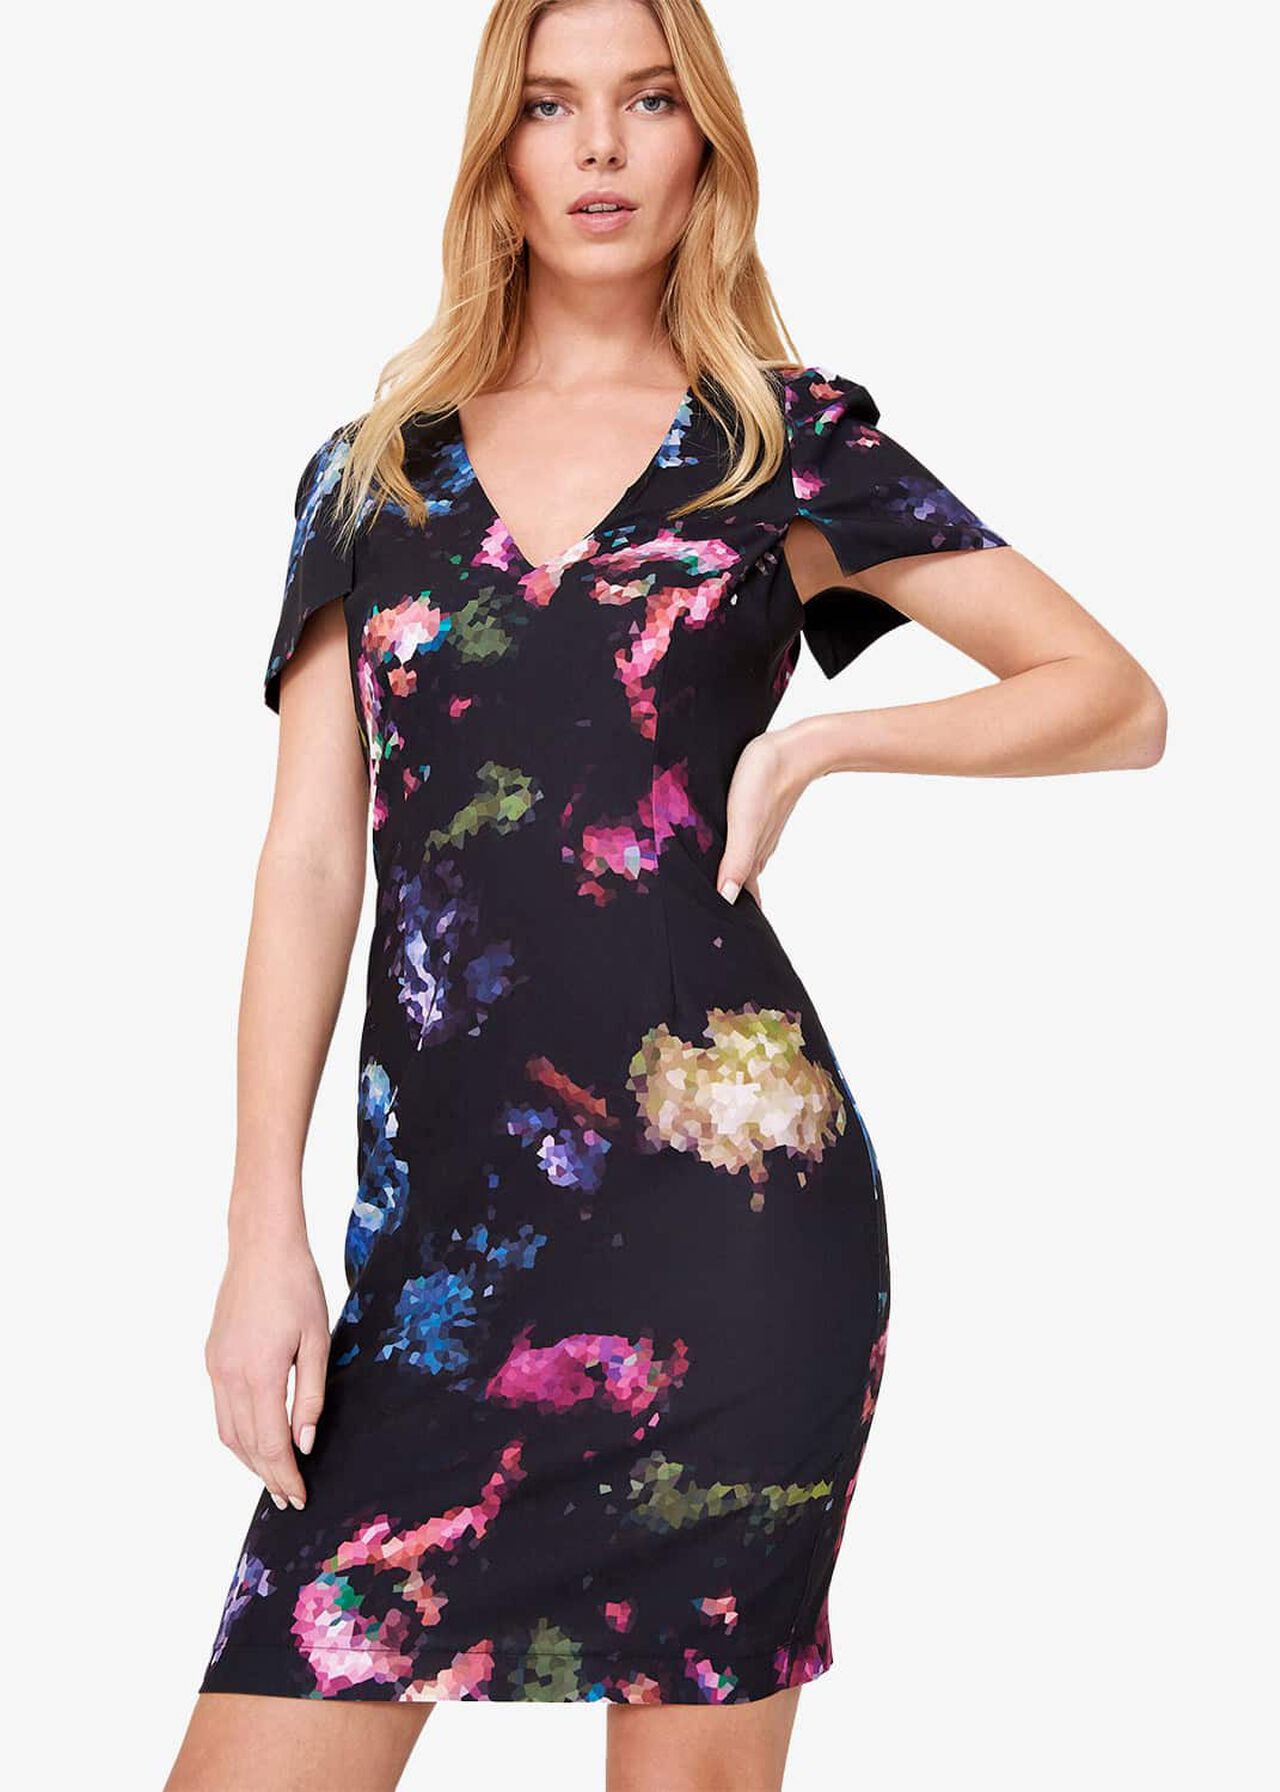 Pixelated Floral Print Dress